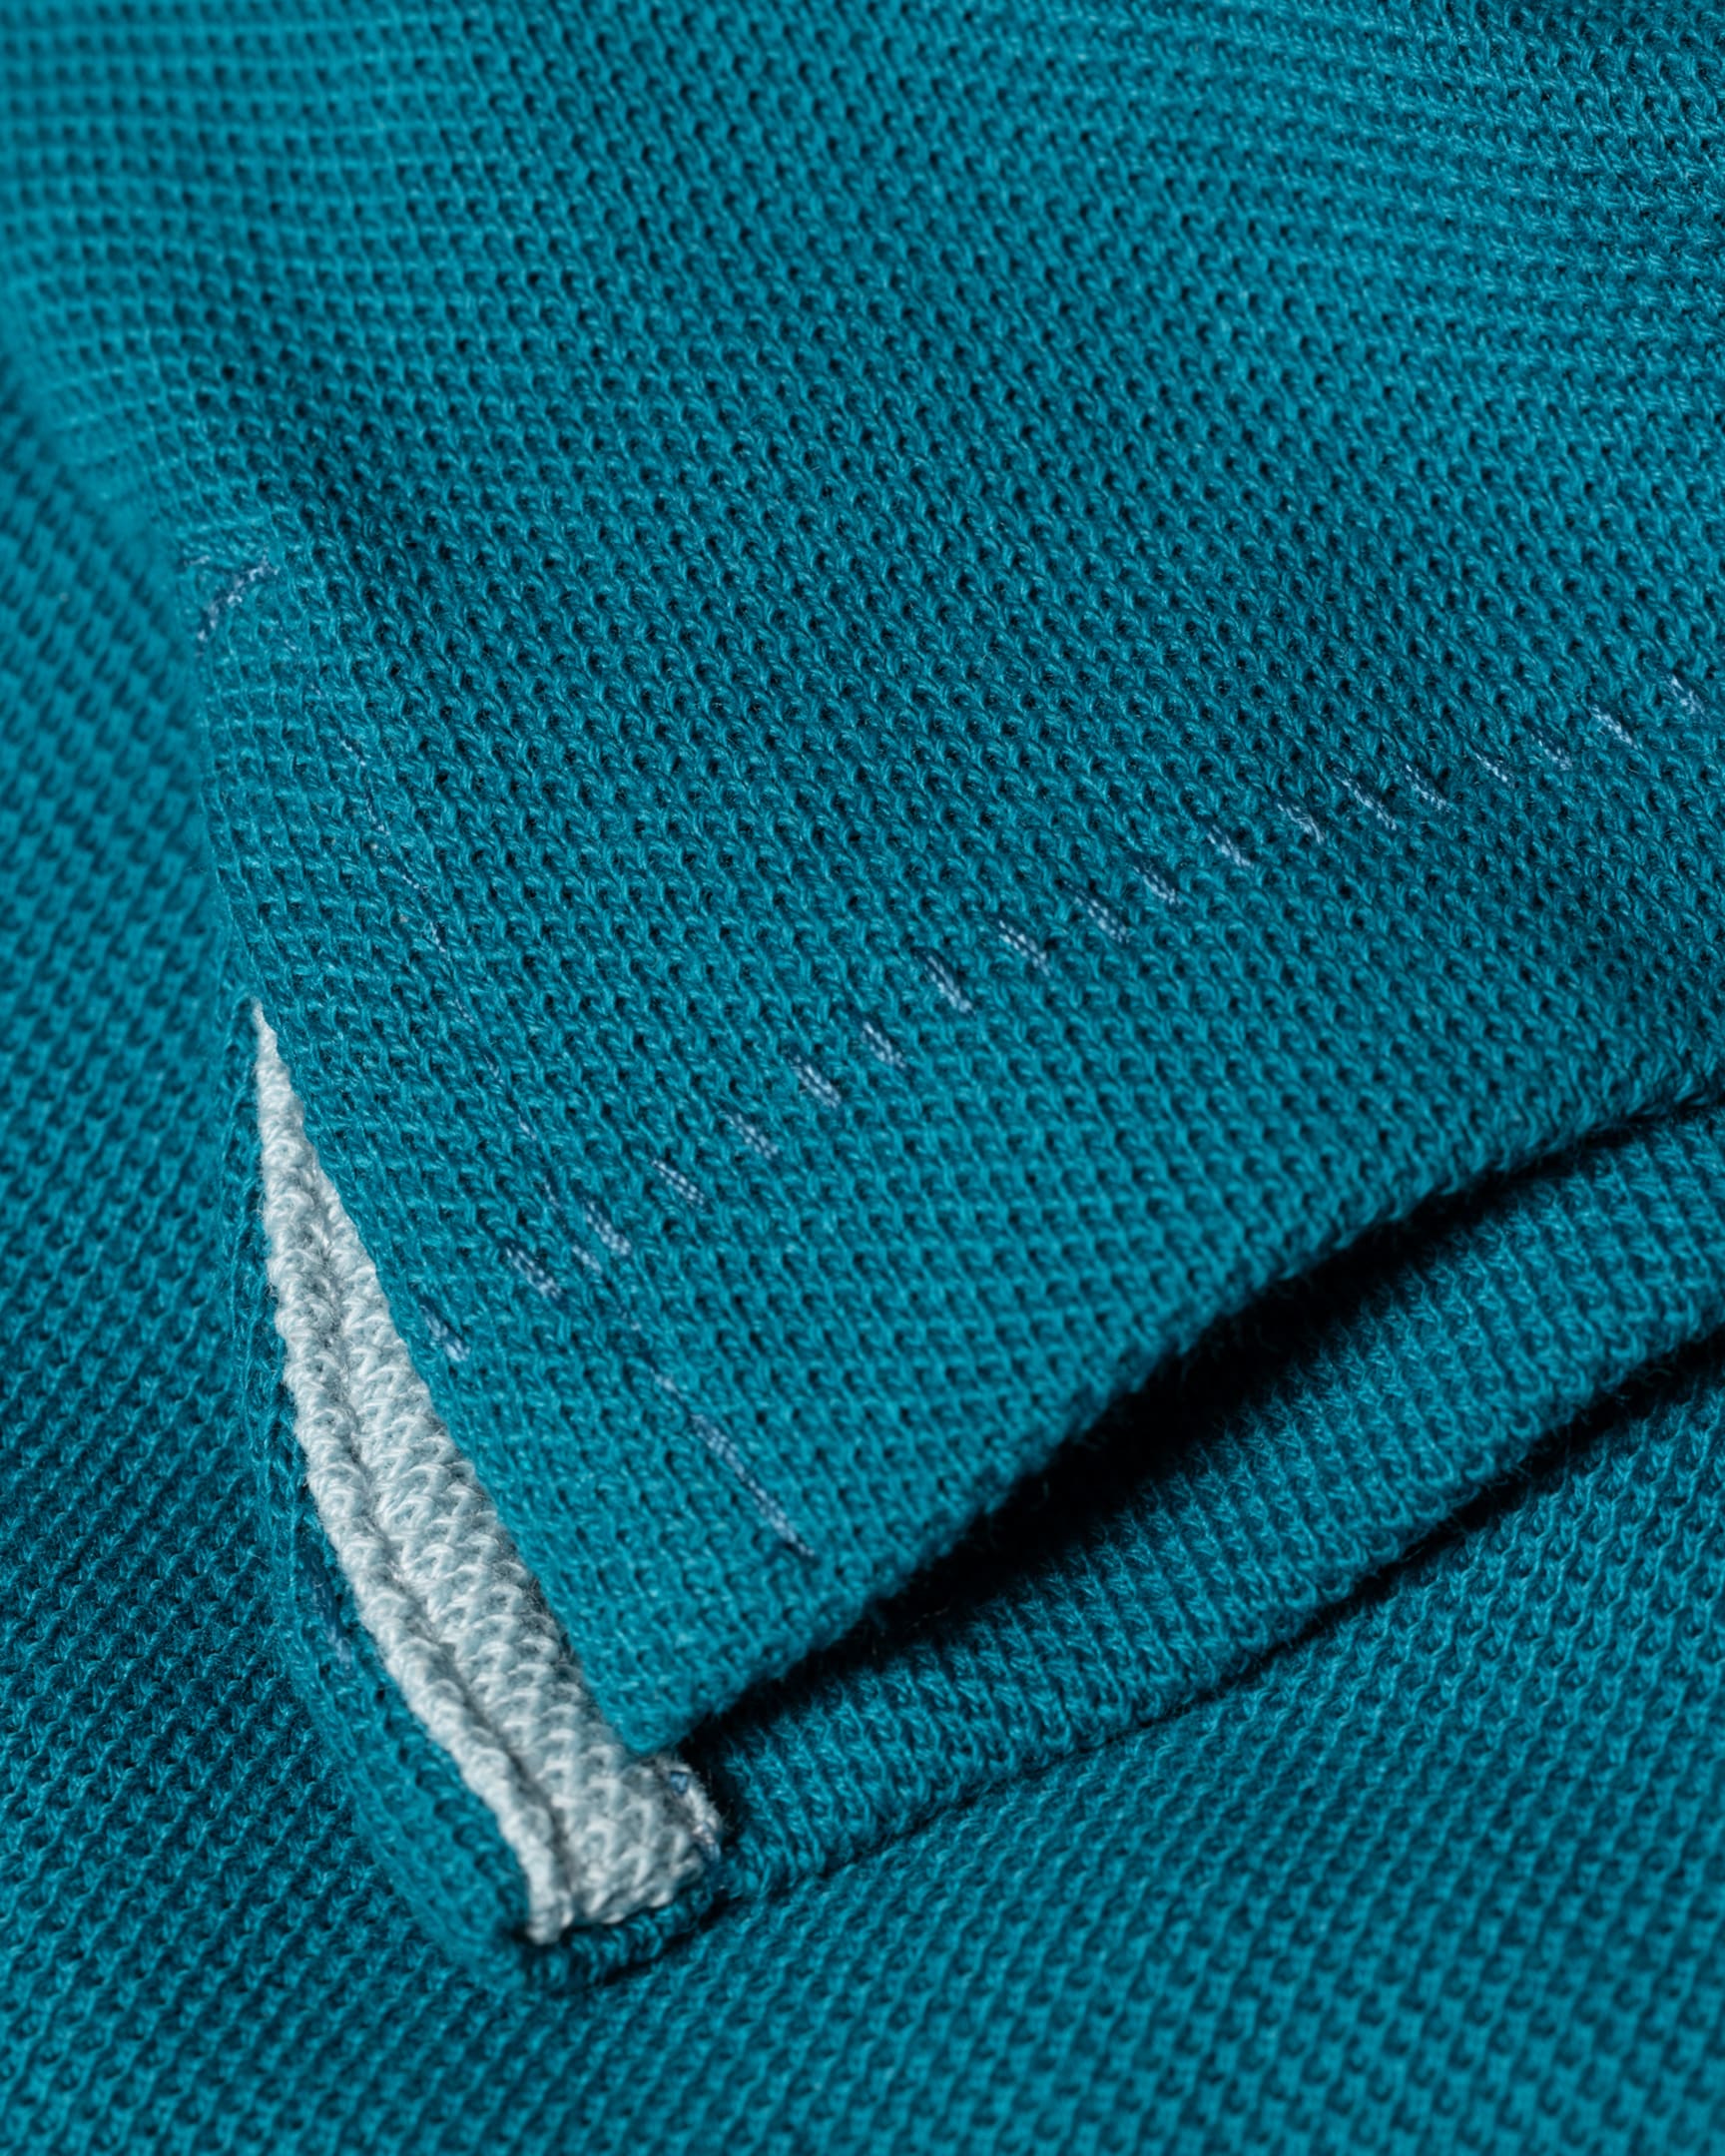 Detail View - Teal Blue Long-Sleeve Zebra Logo Polo Shirt Paul Smith